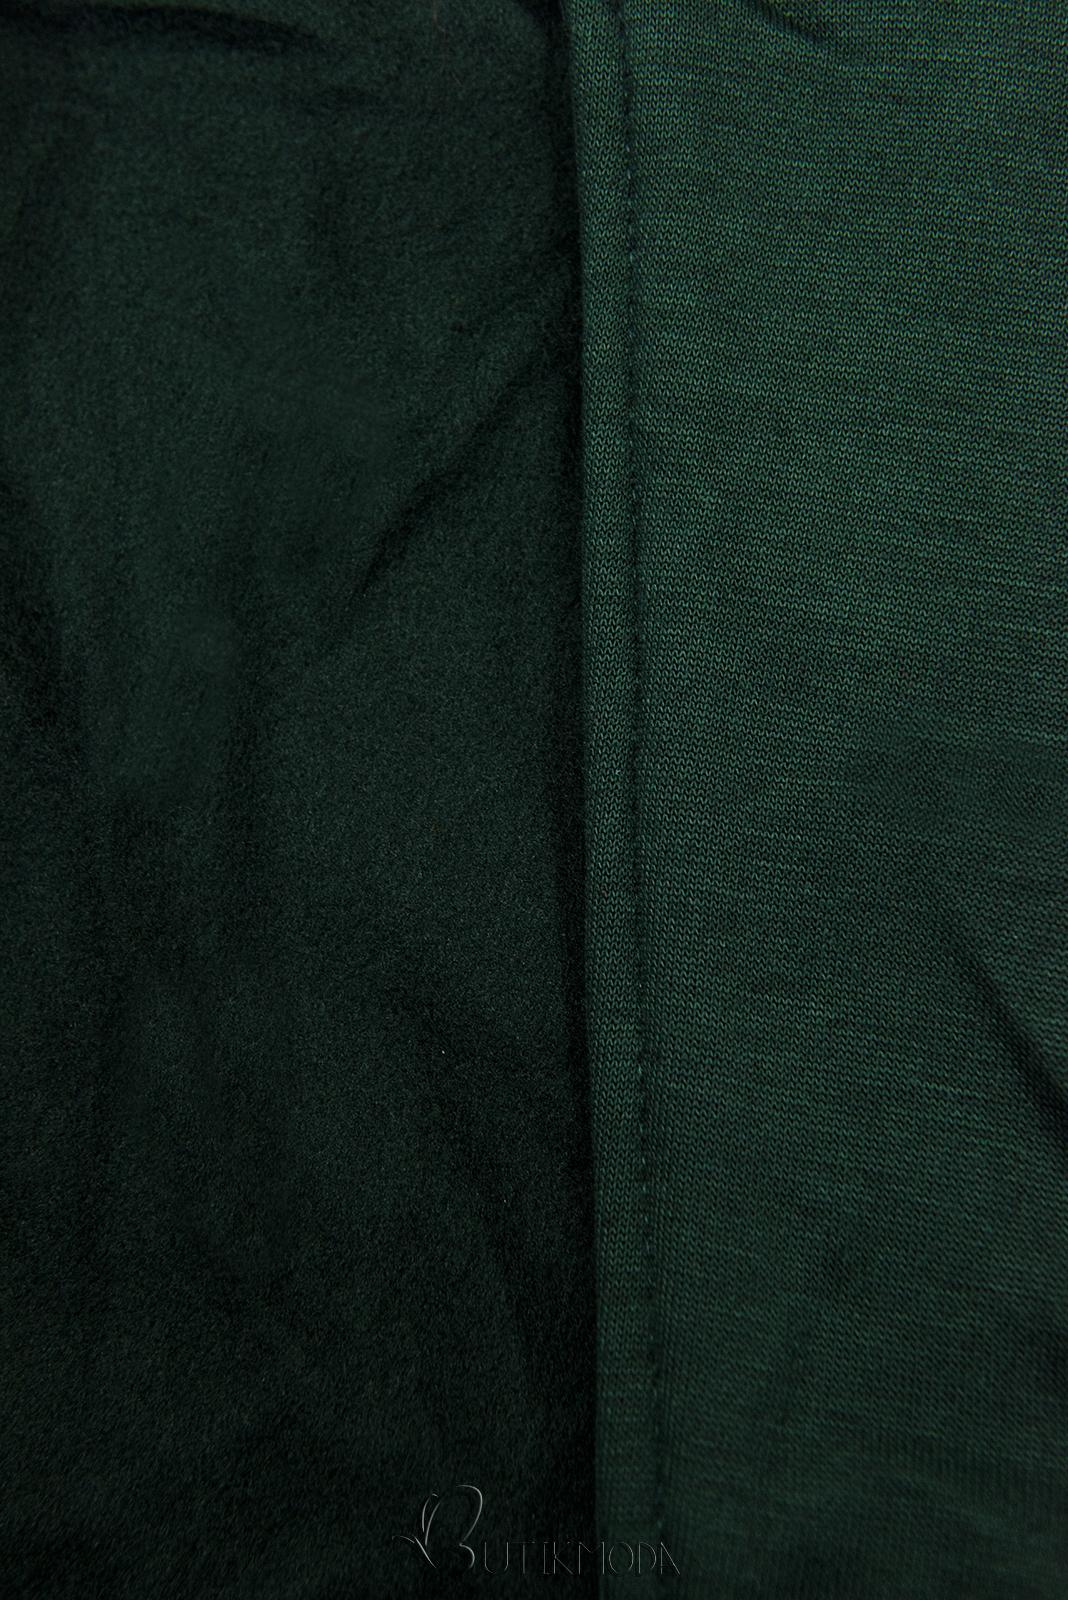 Kapuzensweatjacke in längerer Form smaragdgrün